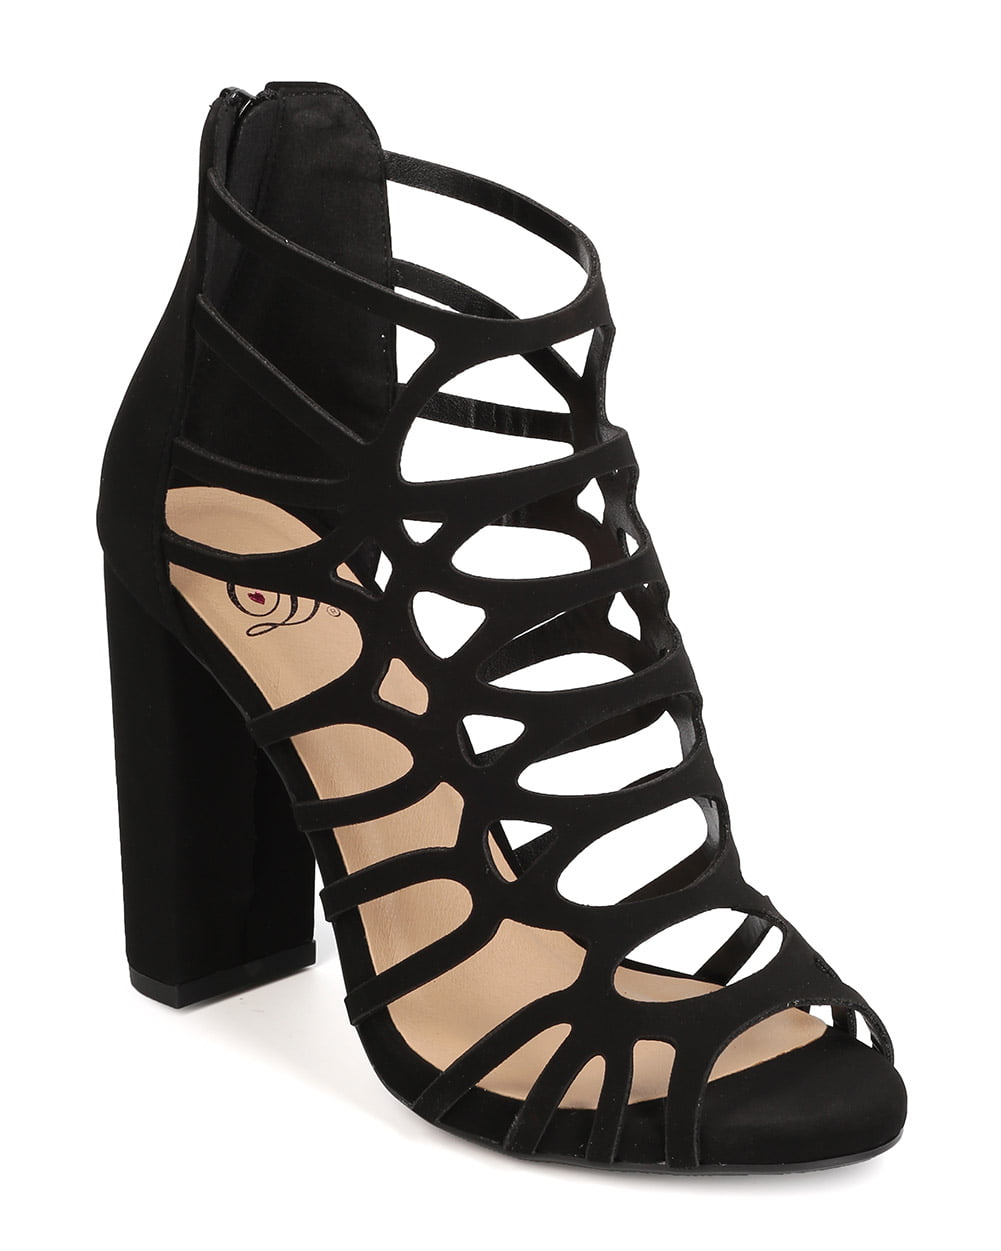 Schutz Block heels in brown Caged jaden heels 36.5, Women's Fashion,  Footwear, Heels on Carousell